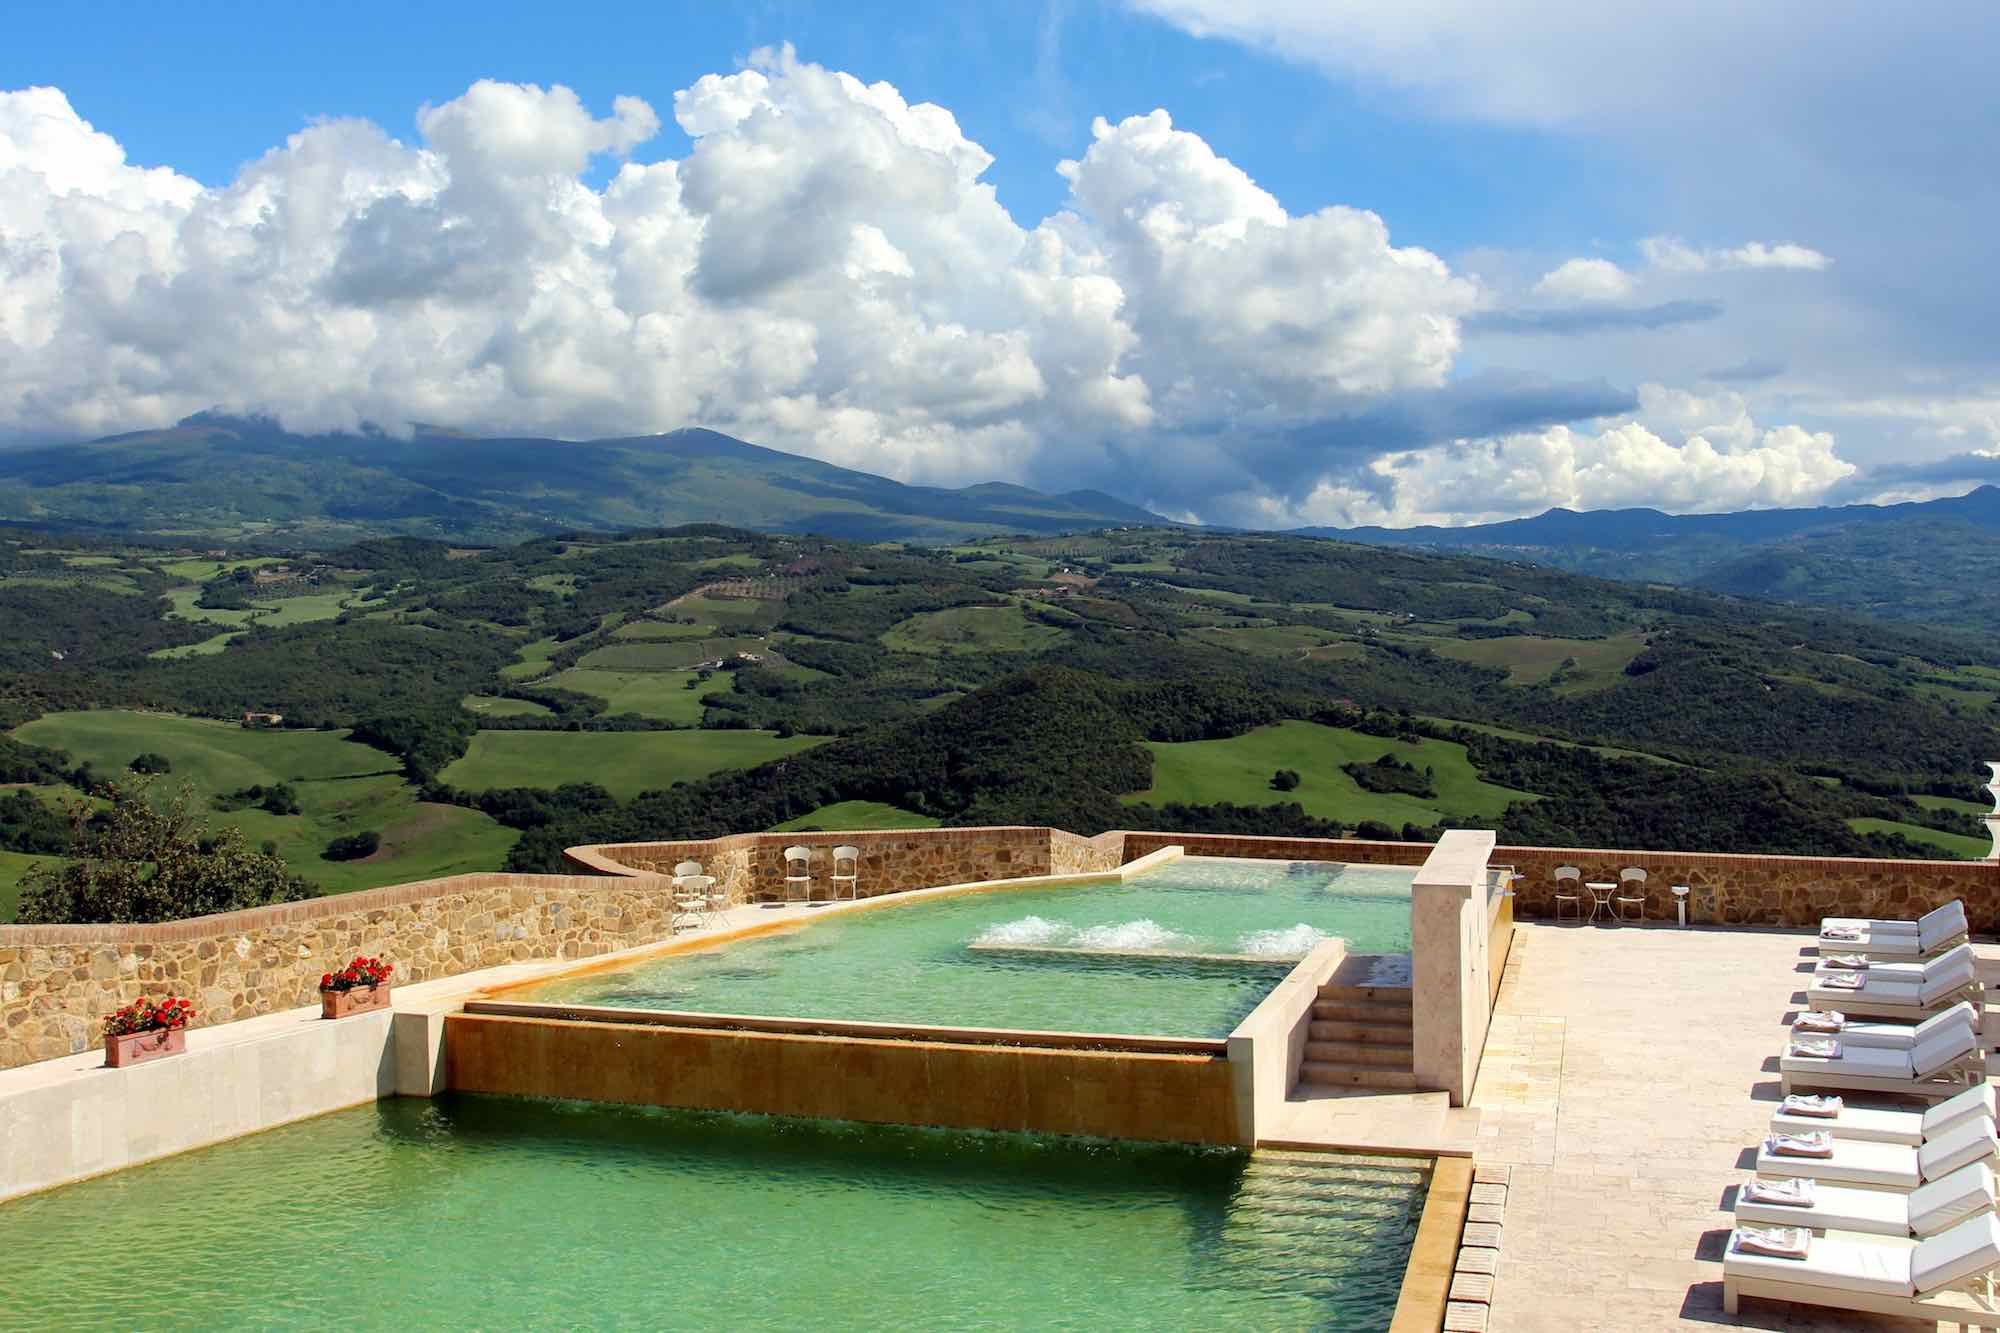 La piscina di un bellissimo resort per una vacanza relax in Toscana